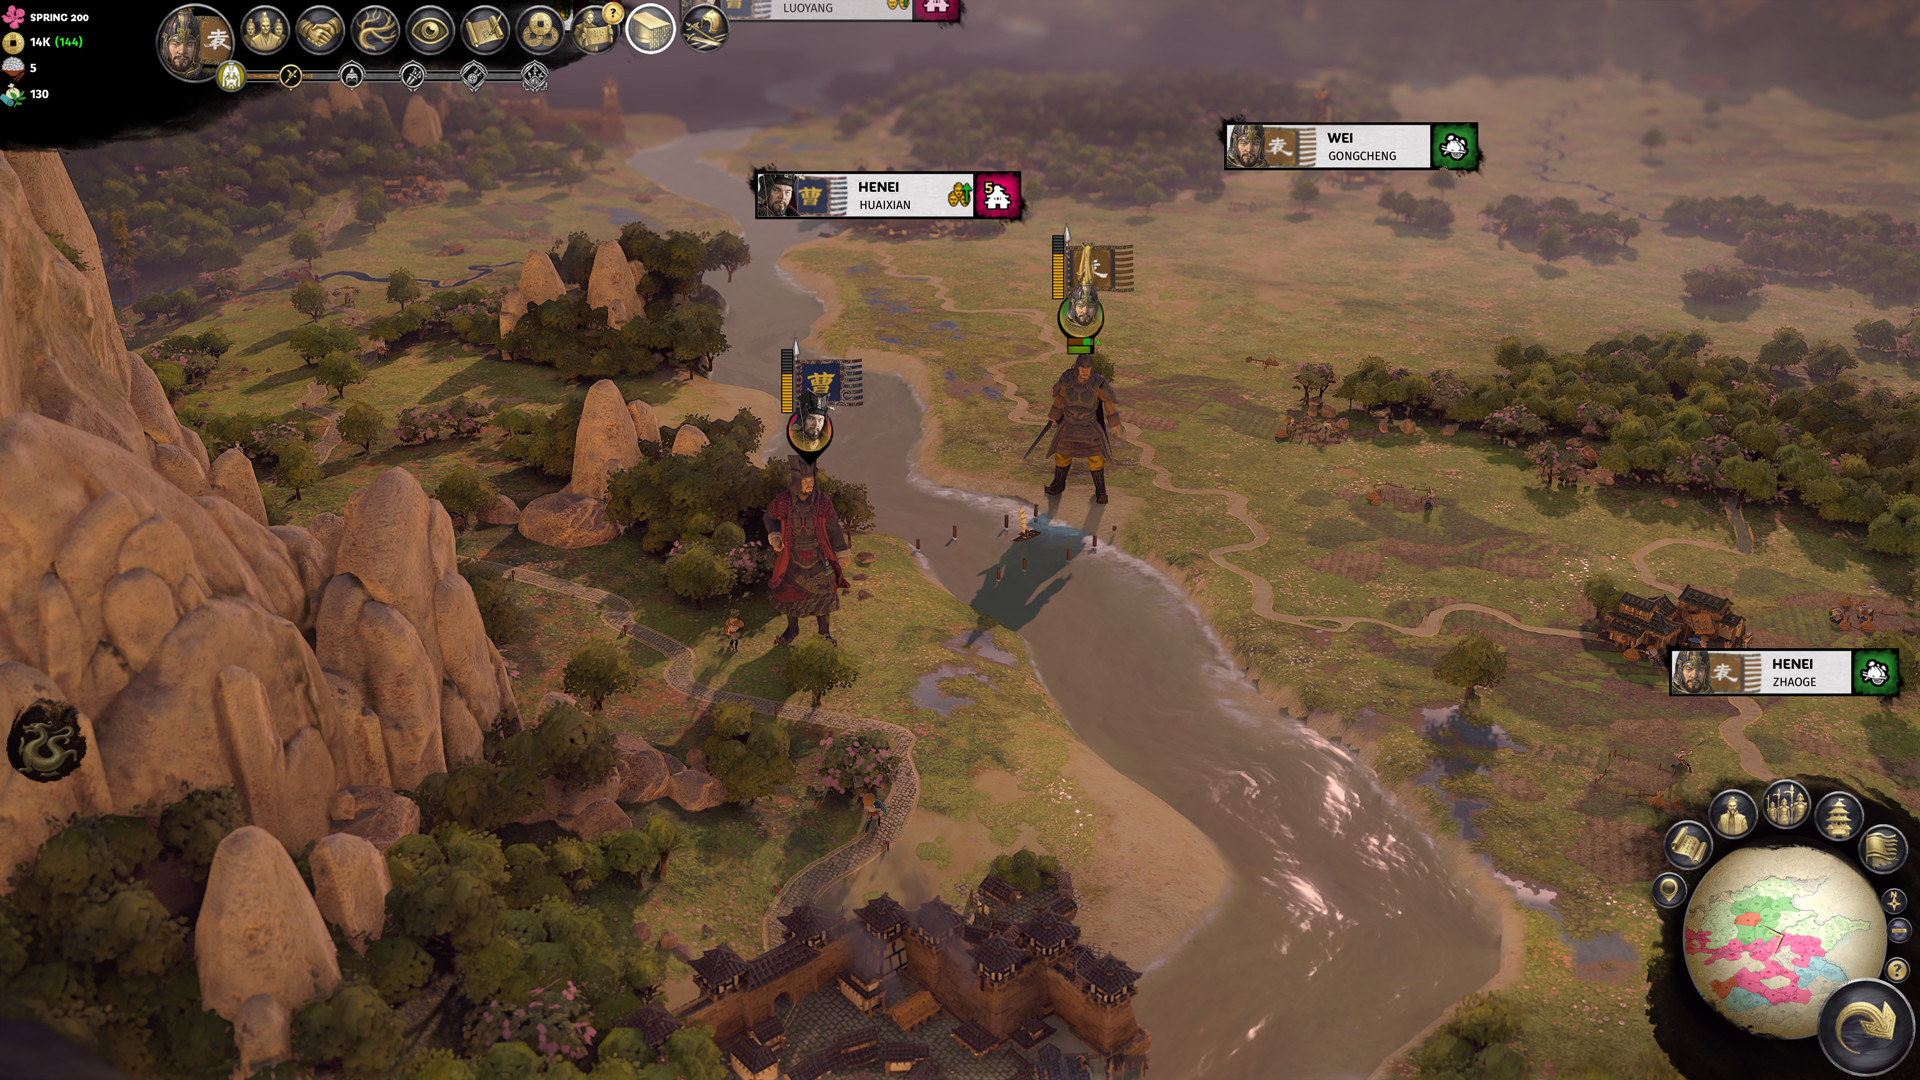 Total War: THREE KINGDOMS Emperor Edition Steam CD Key